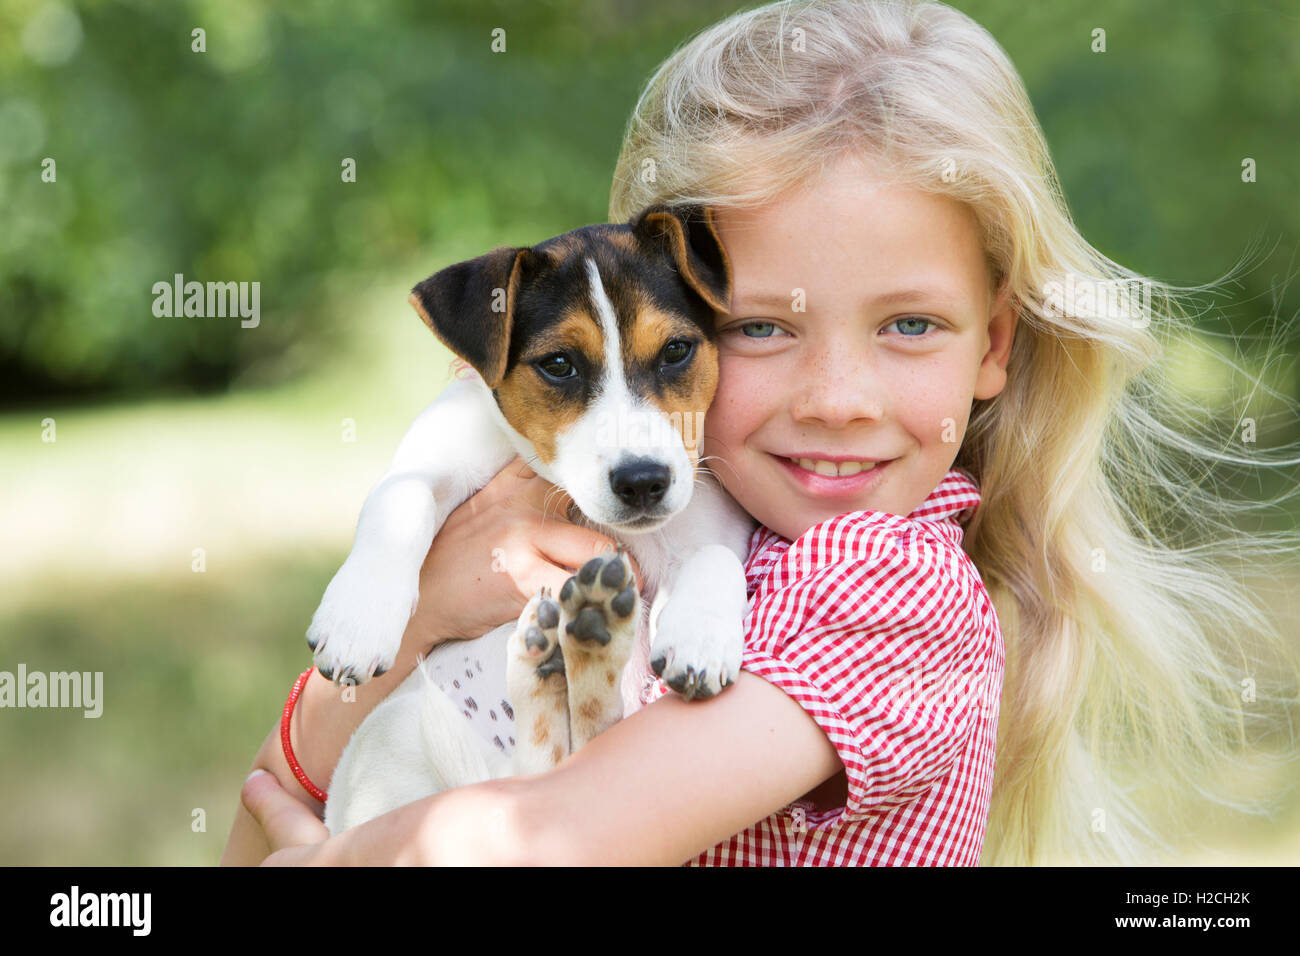 Portrait Of Girl Holding Pet Dog Stock Photo